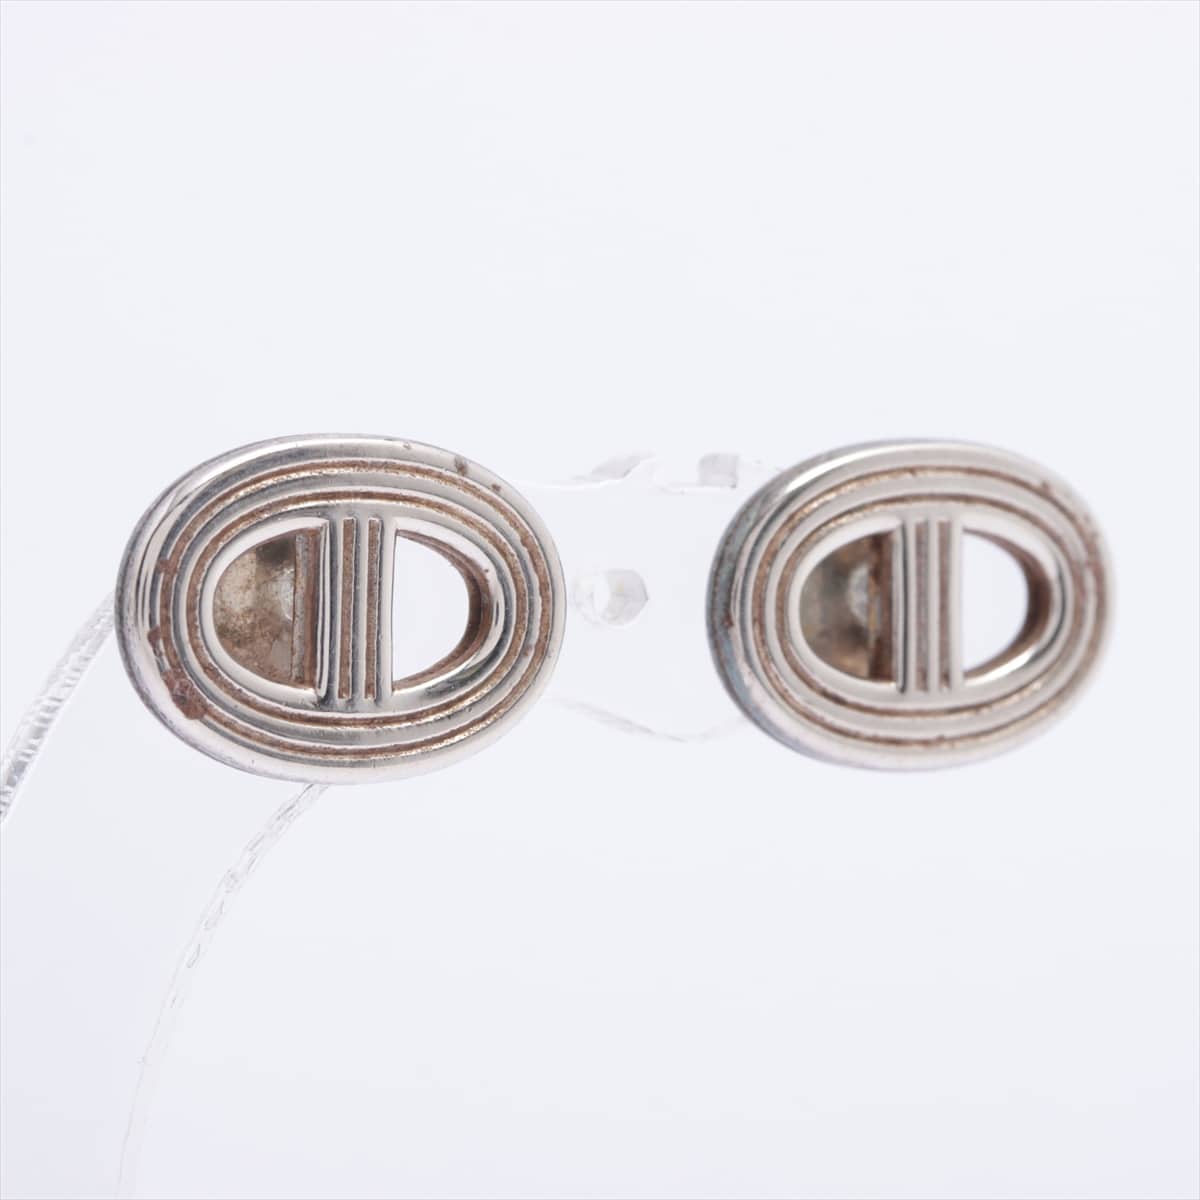 Hermès Chaîne d'Ancre Piercing jewelry (for both ears) 925 4.4g Silver